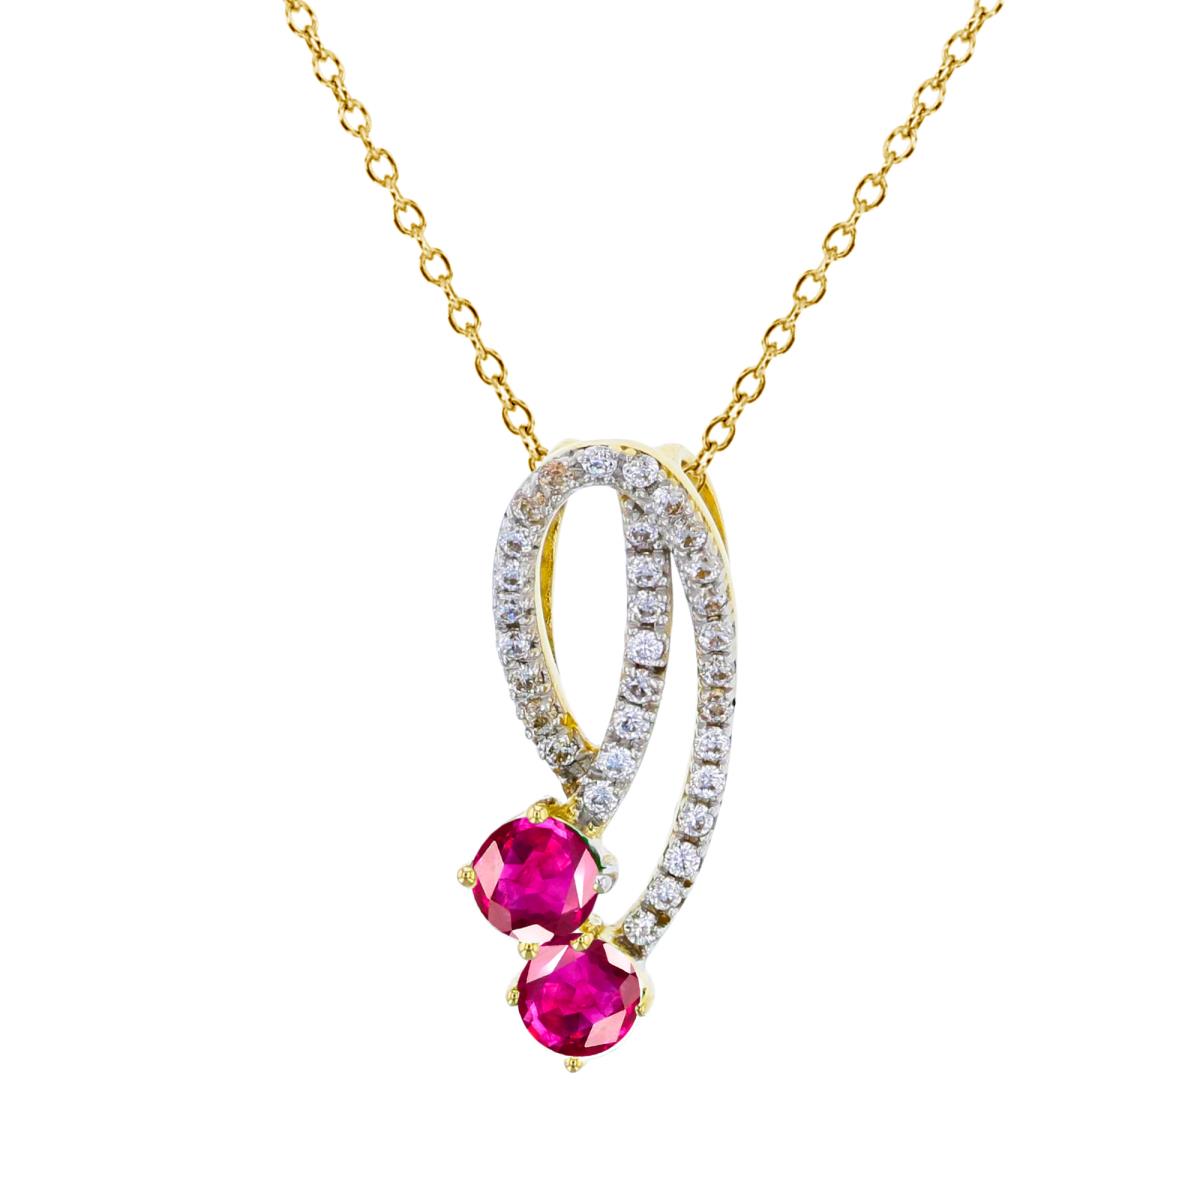 10K Yellow Gold 0.16cttw Rnd Diamonds & 3.5mm Rnd Ruby Fashion 18"Necklace